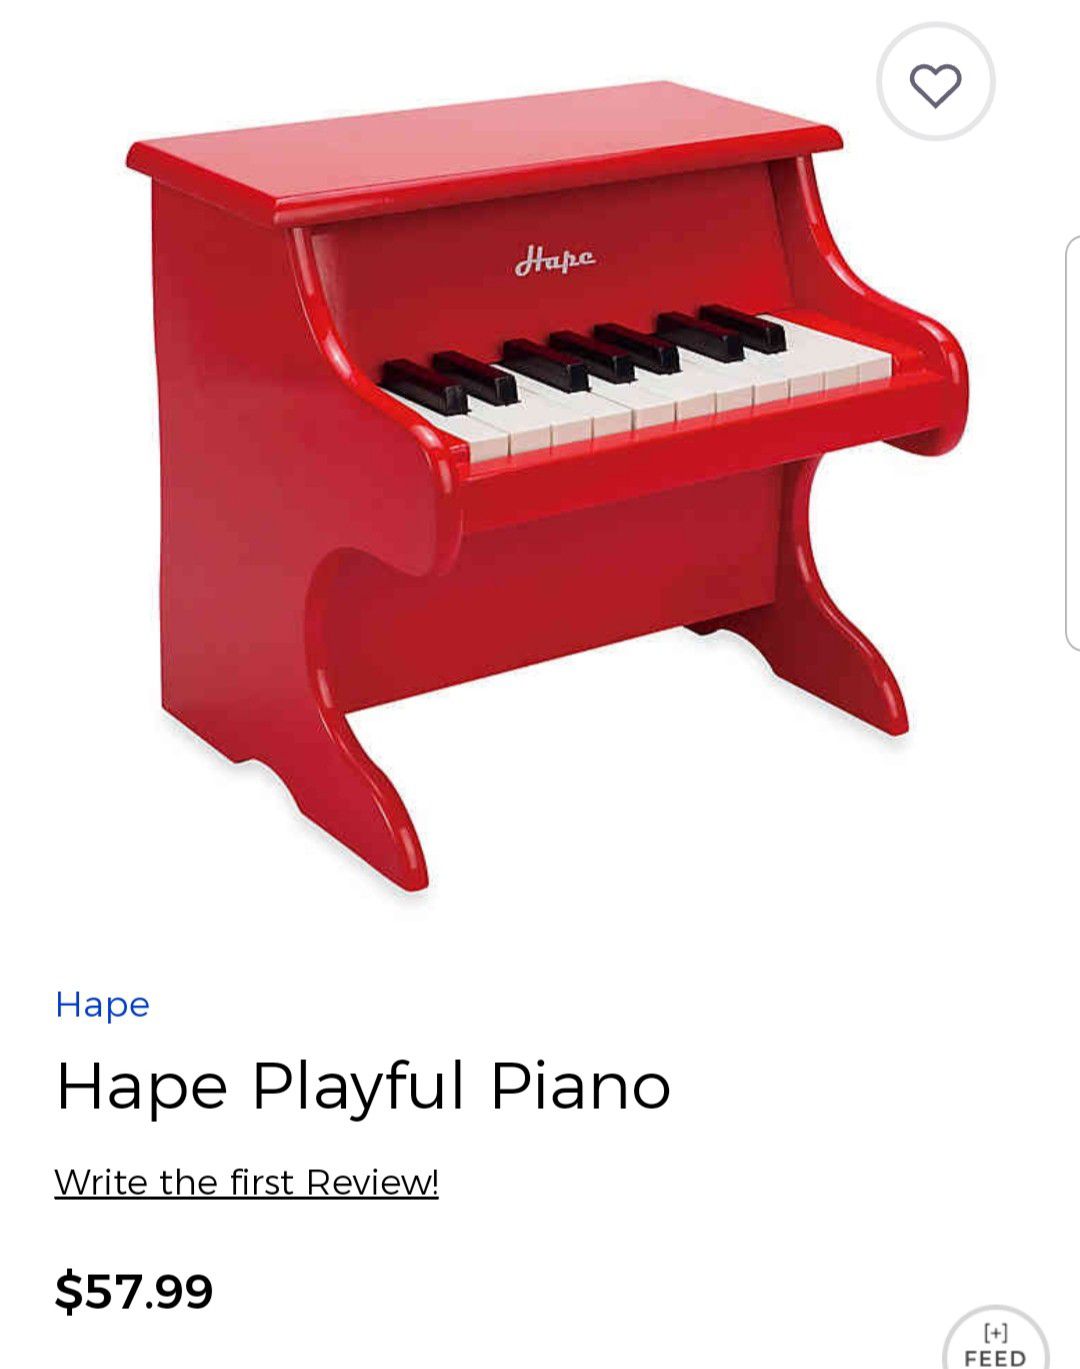 Hape playful piano